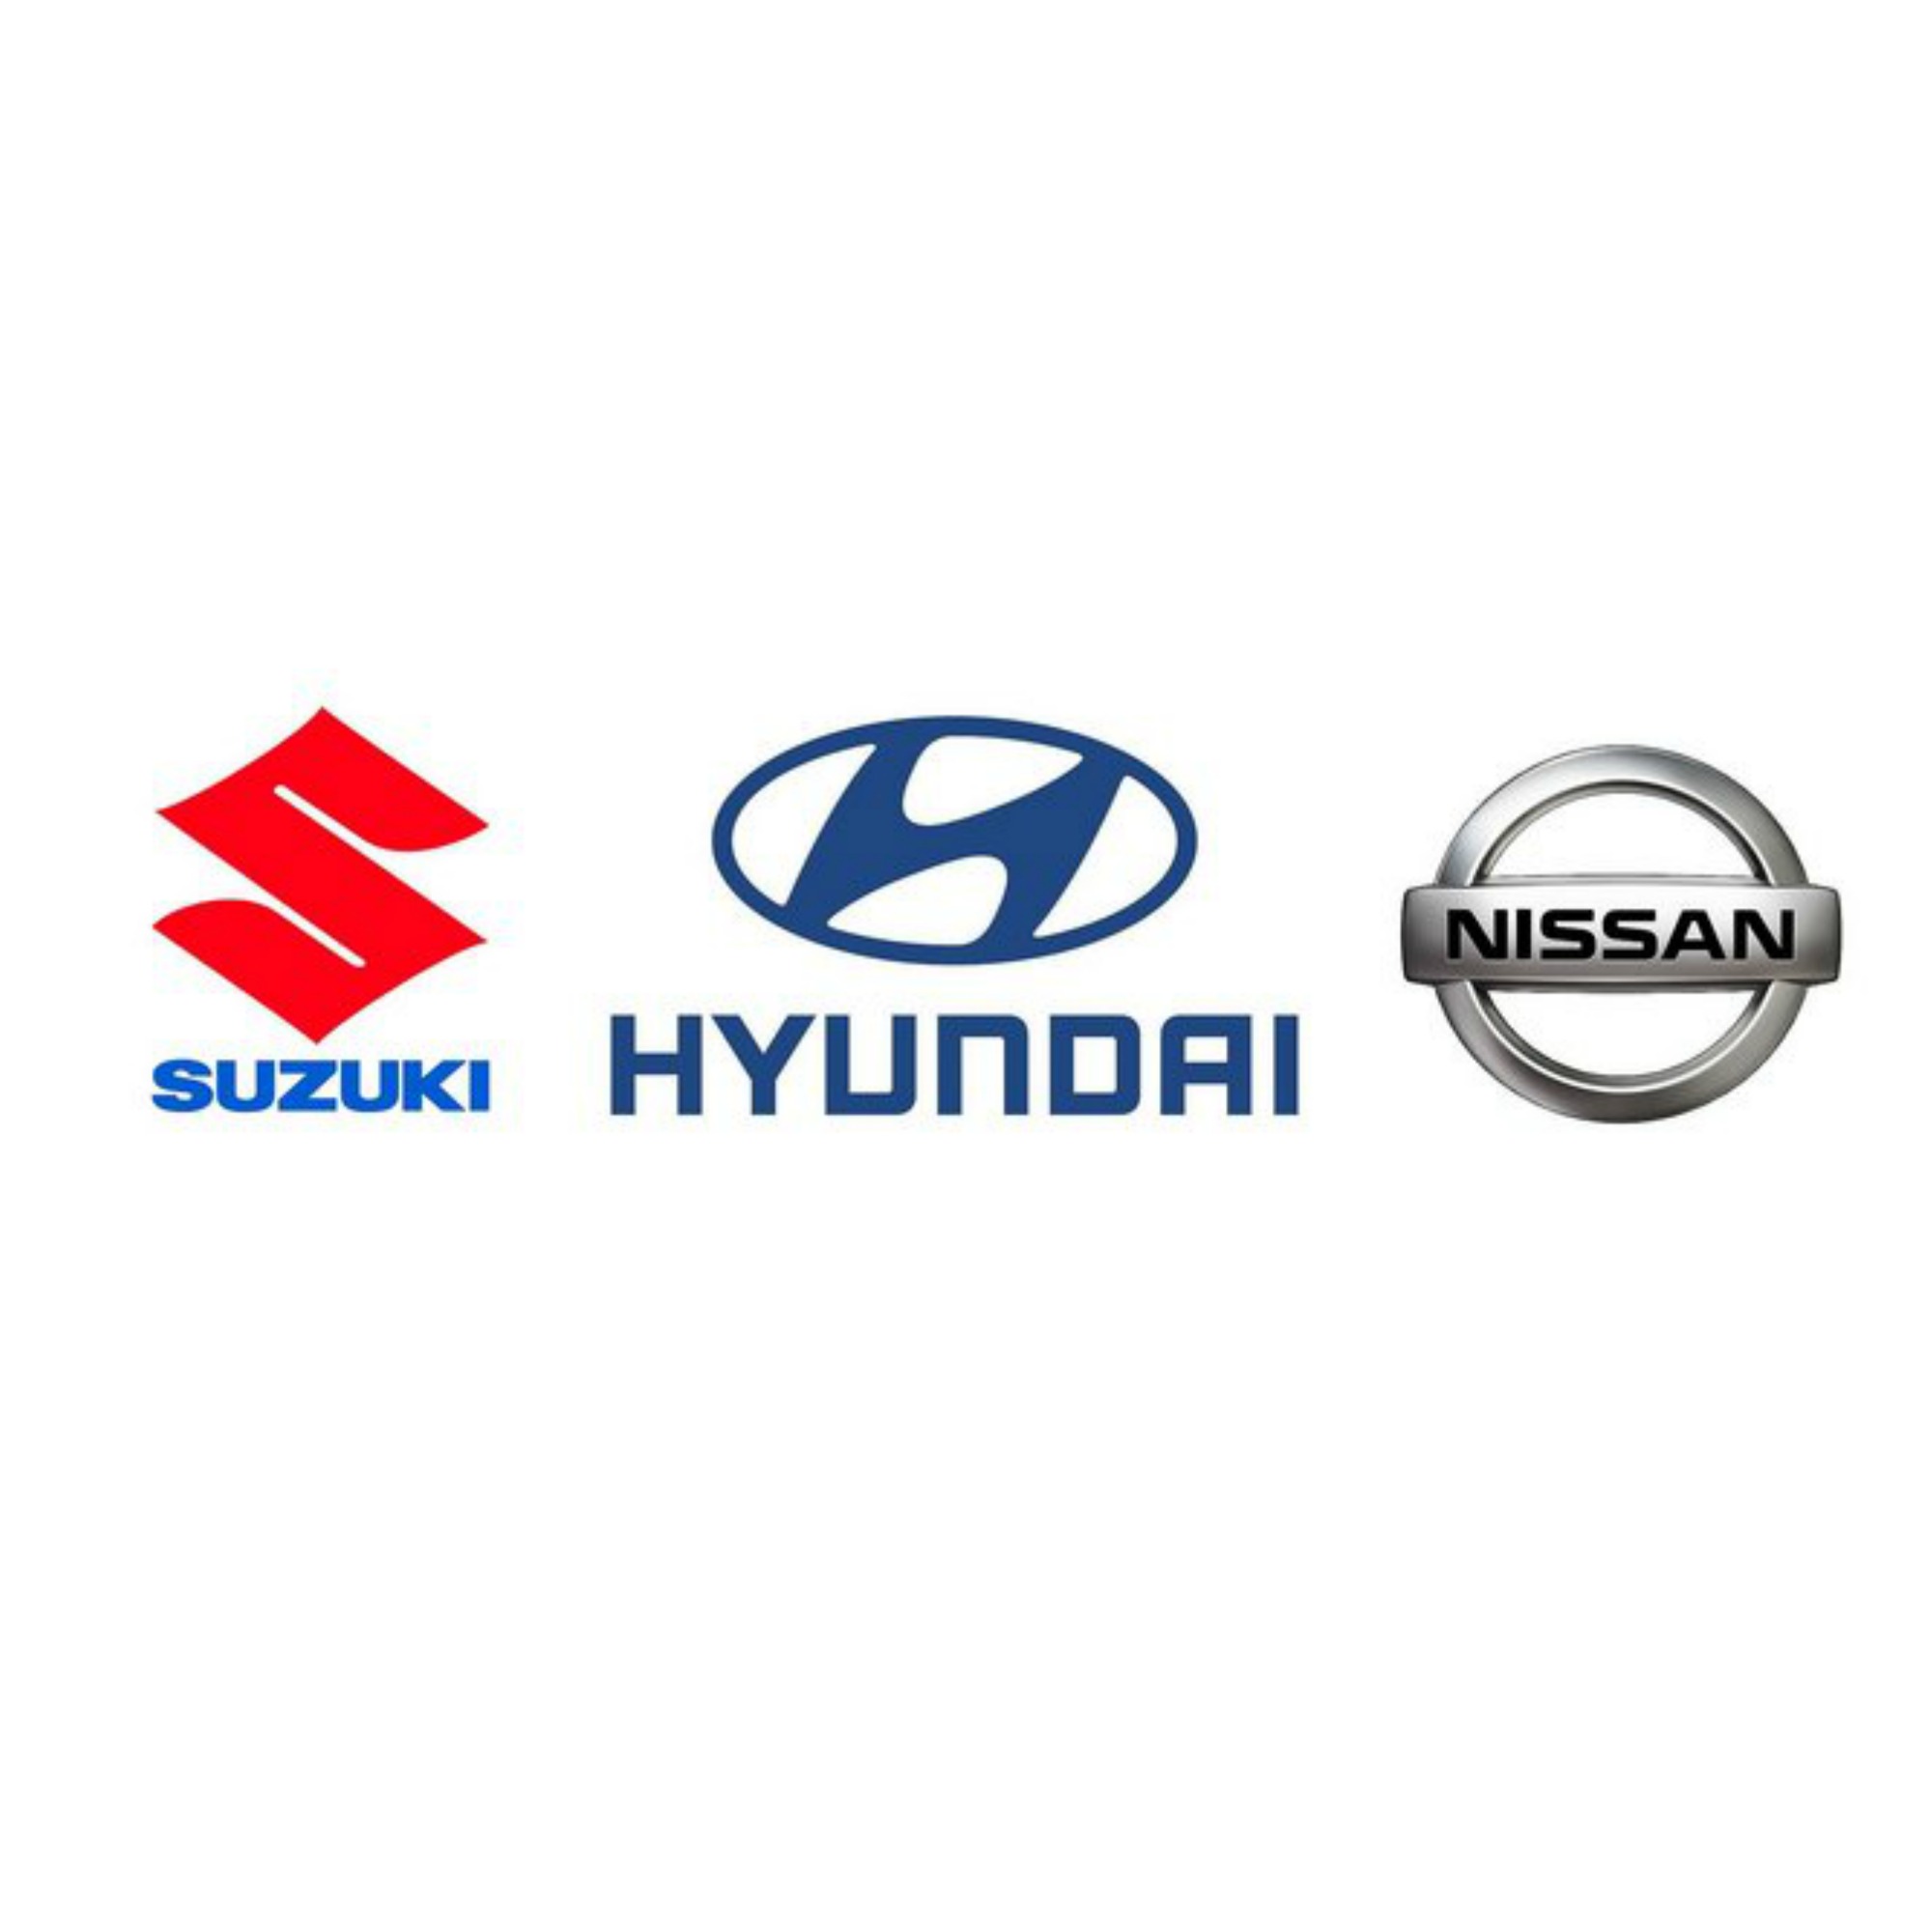 Talleres Martí Benissa (Suzuki, Hyundai, Nissan)